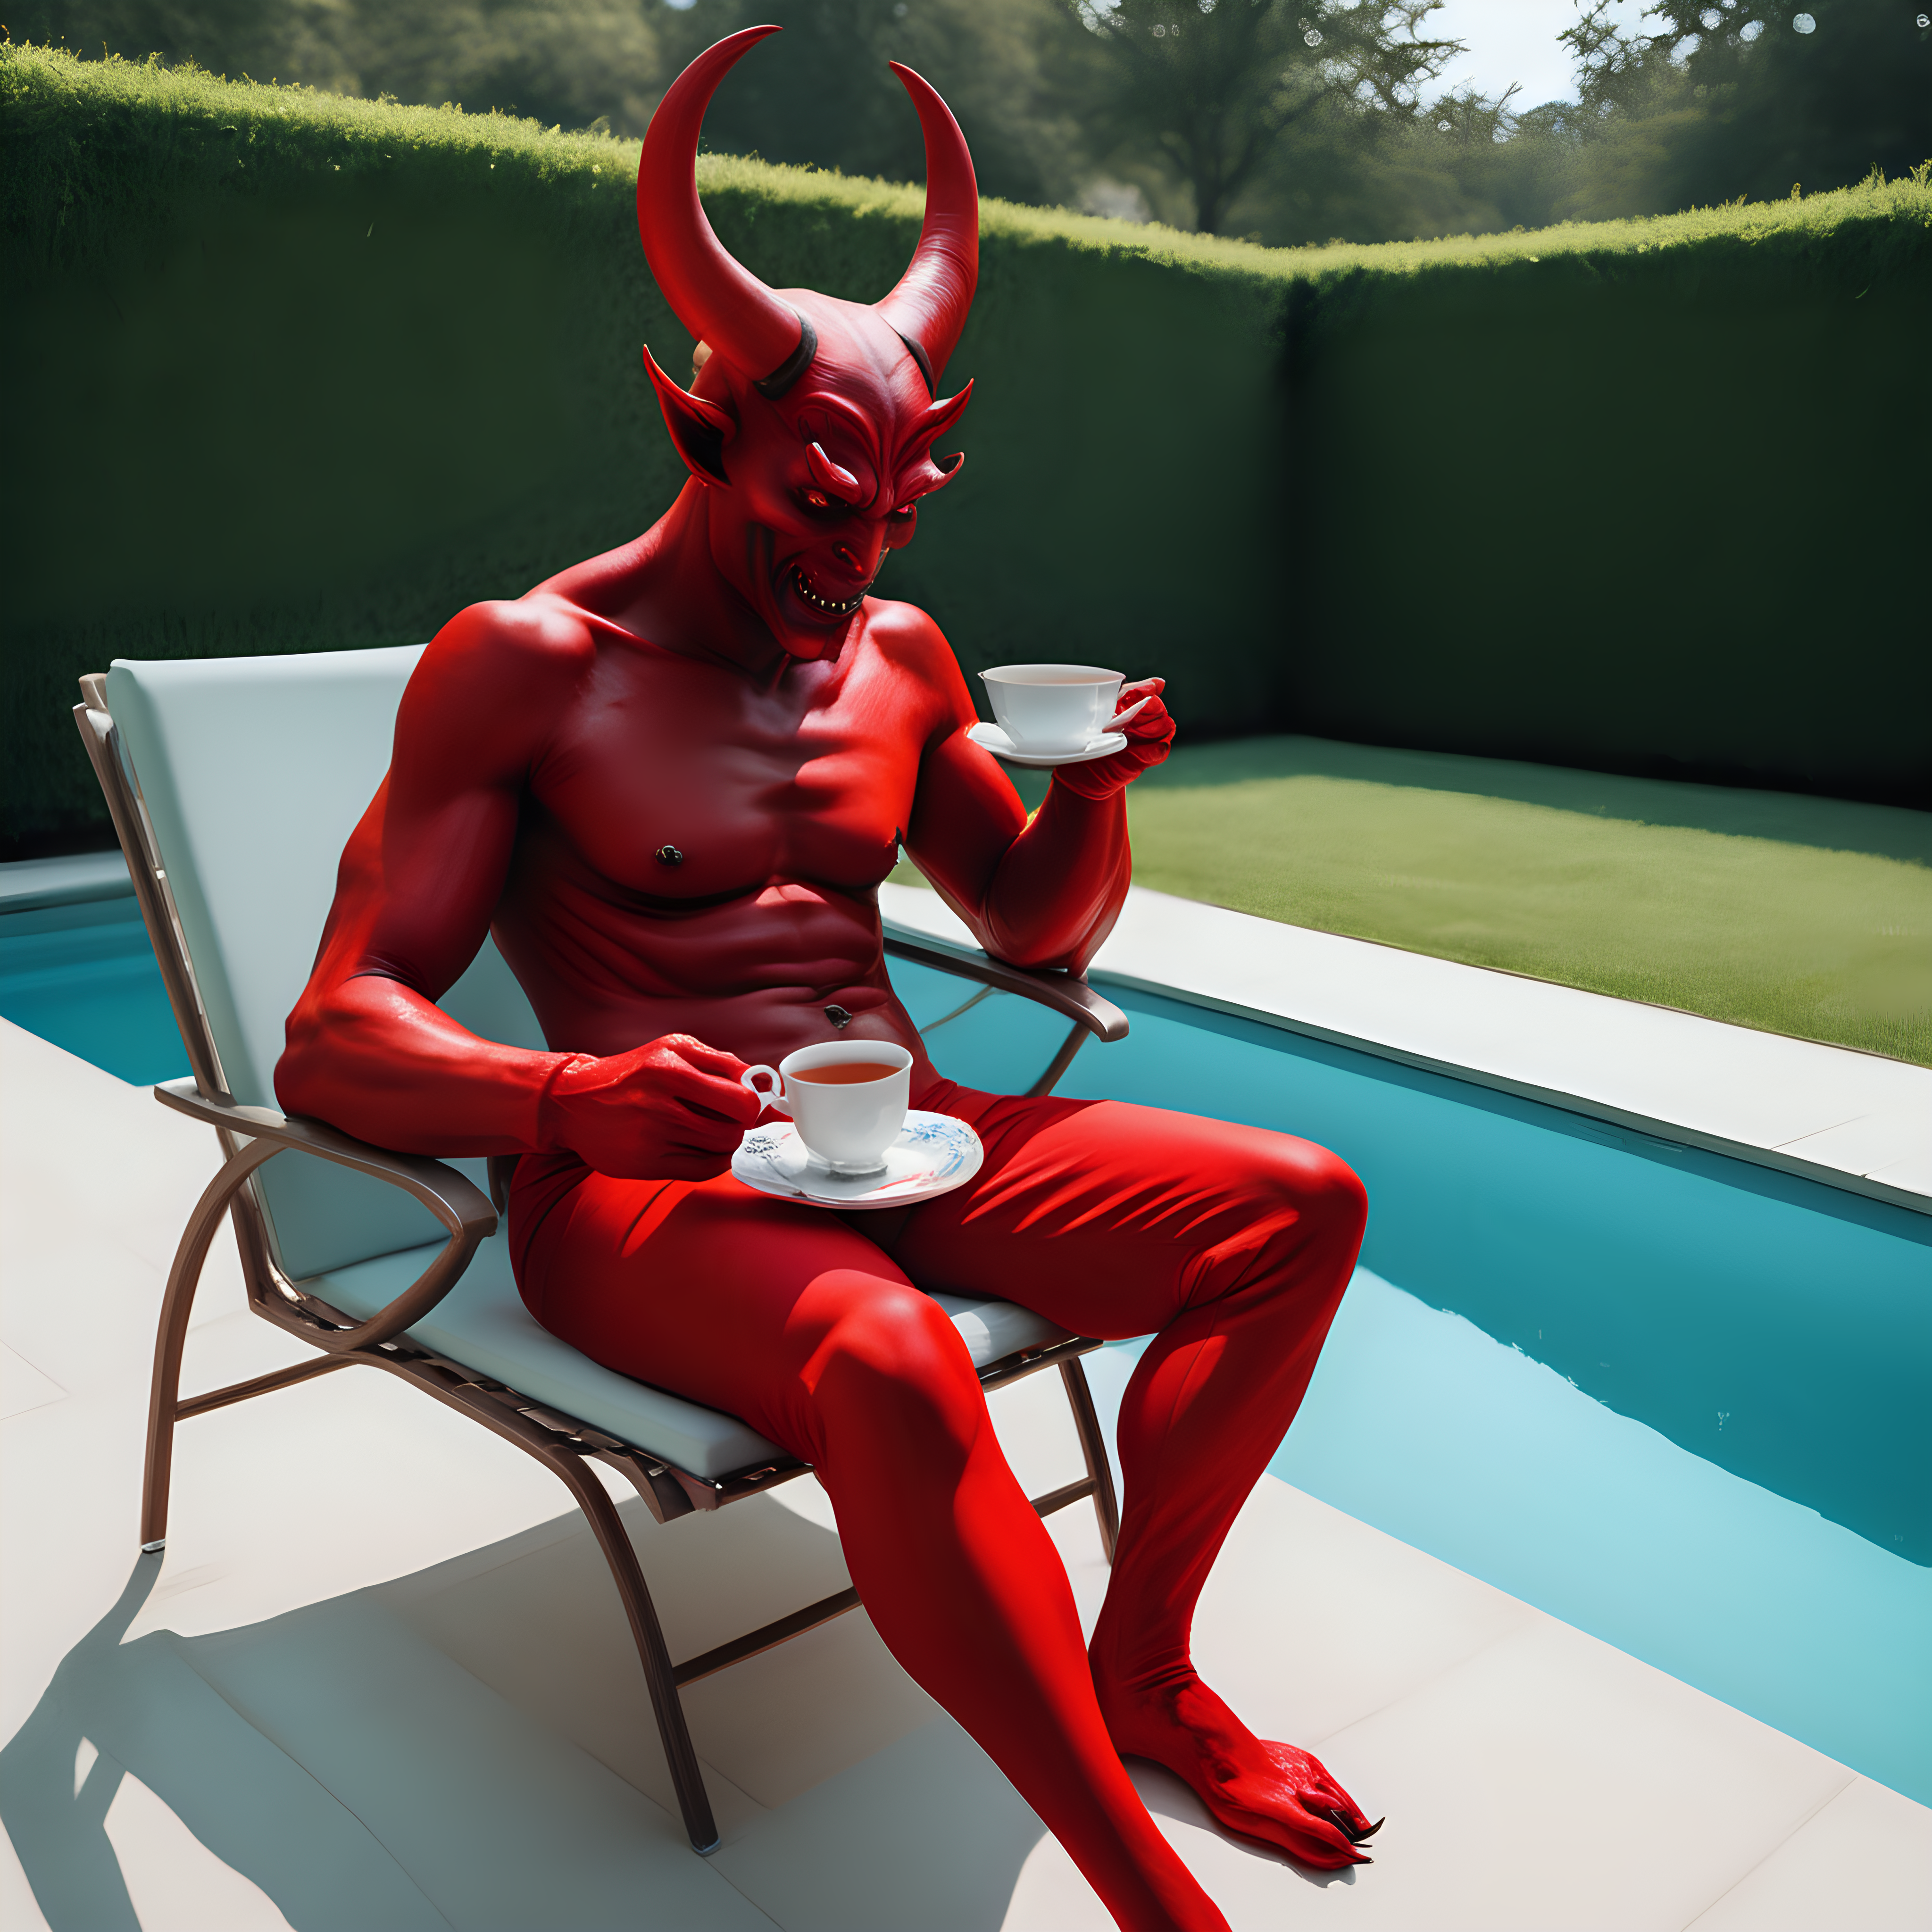 Devil having tea by the pool